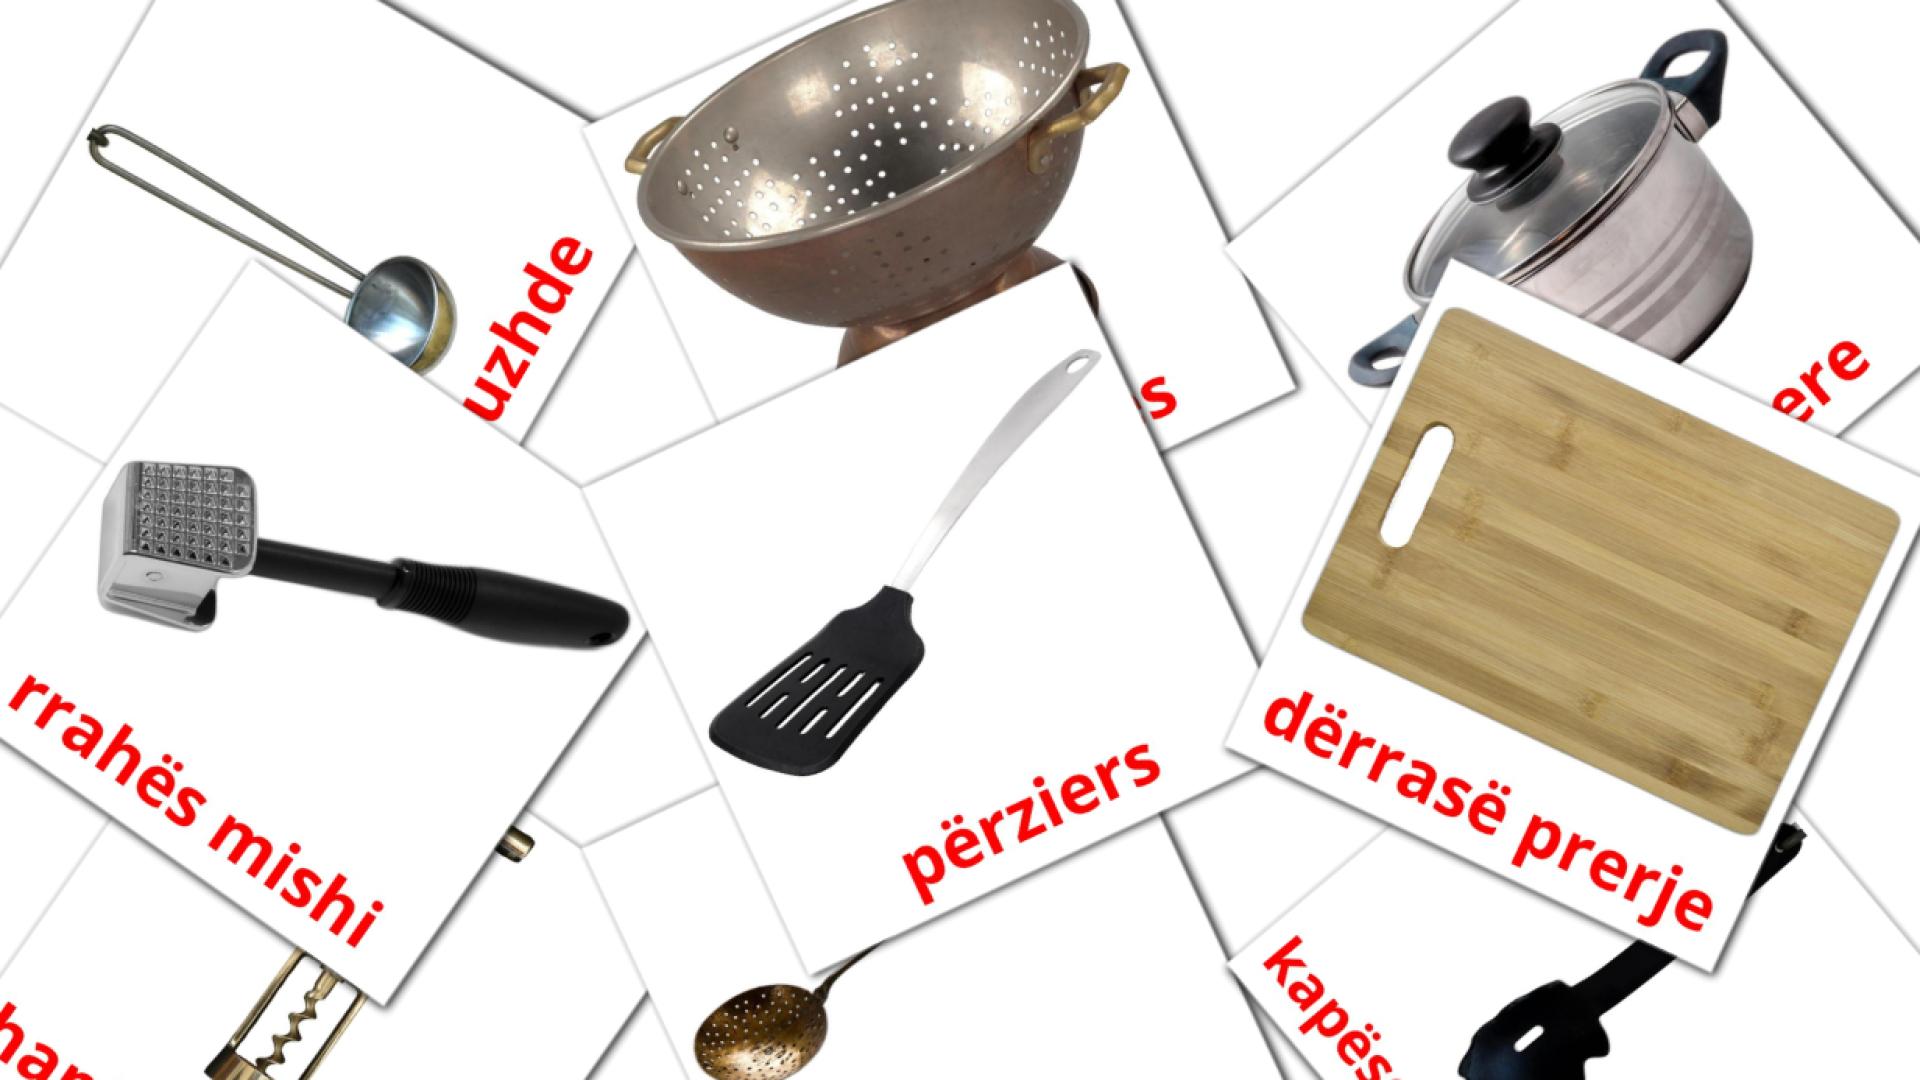 Kitchenware - albanian vocabulary cards